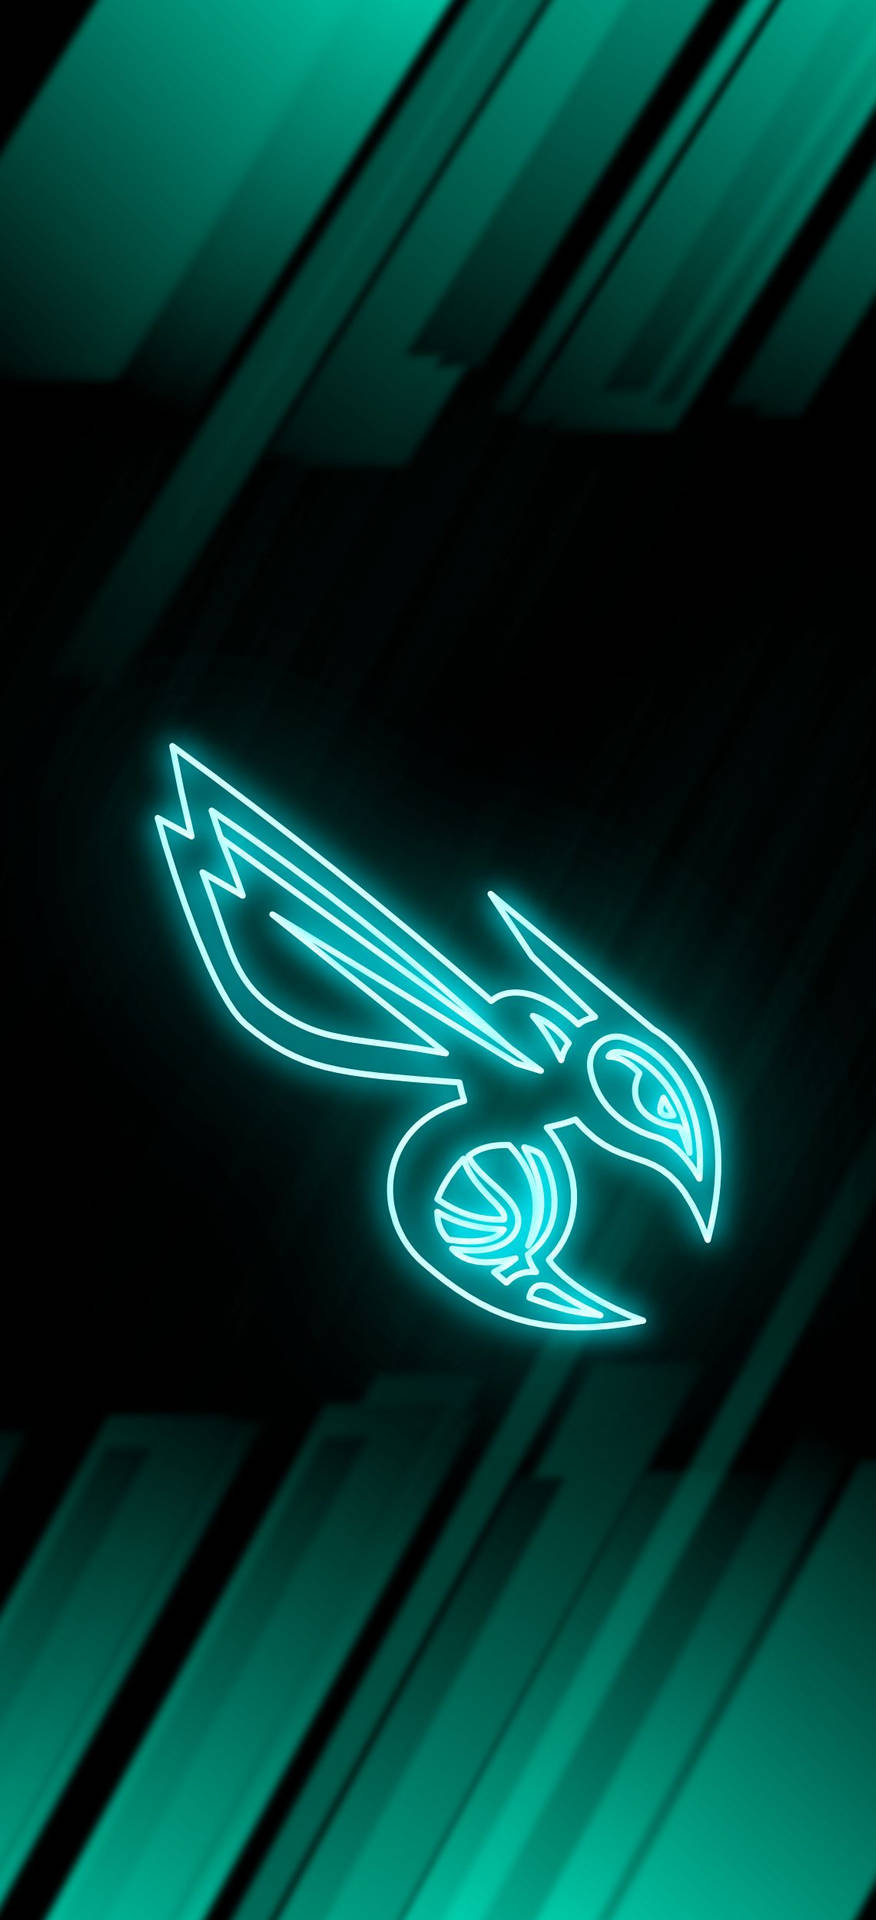 Charlotte Hornets Emblem In Neon Green